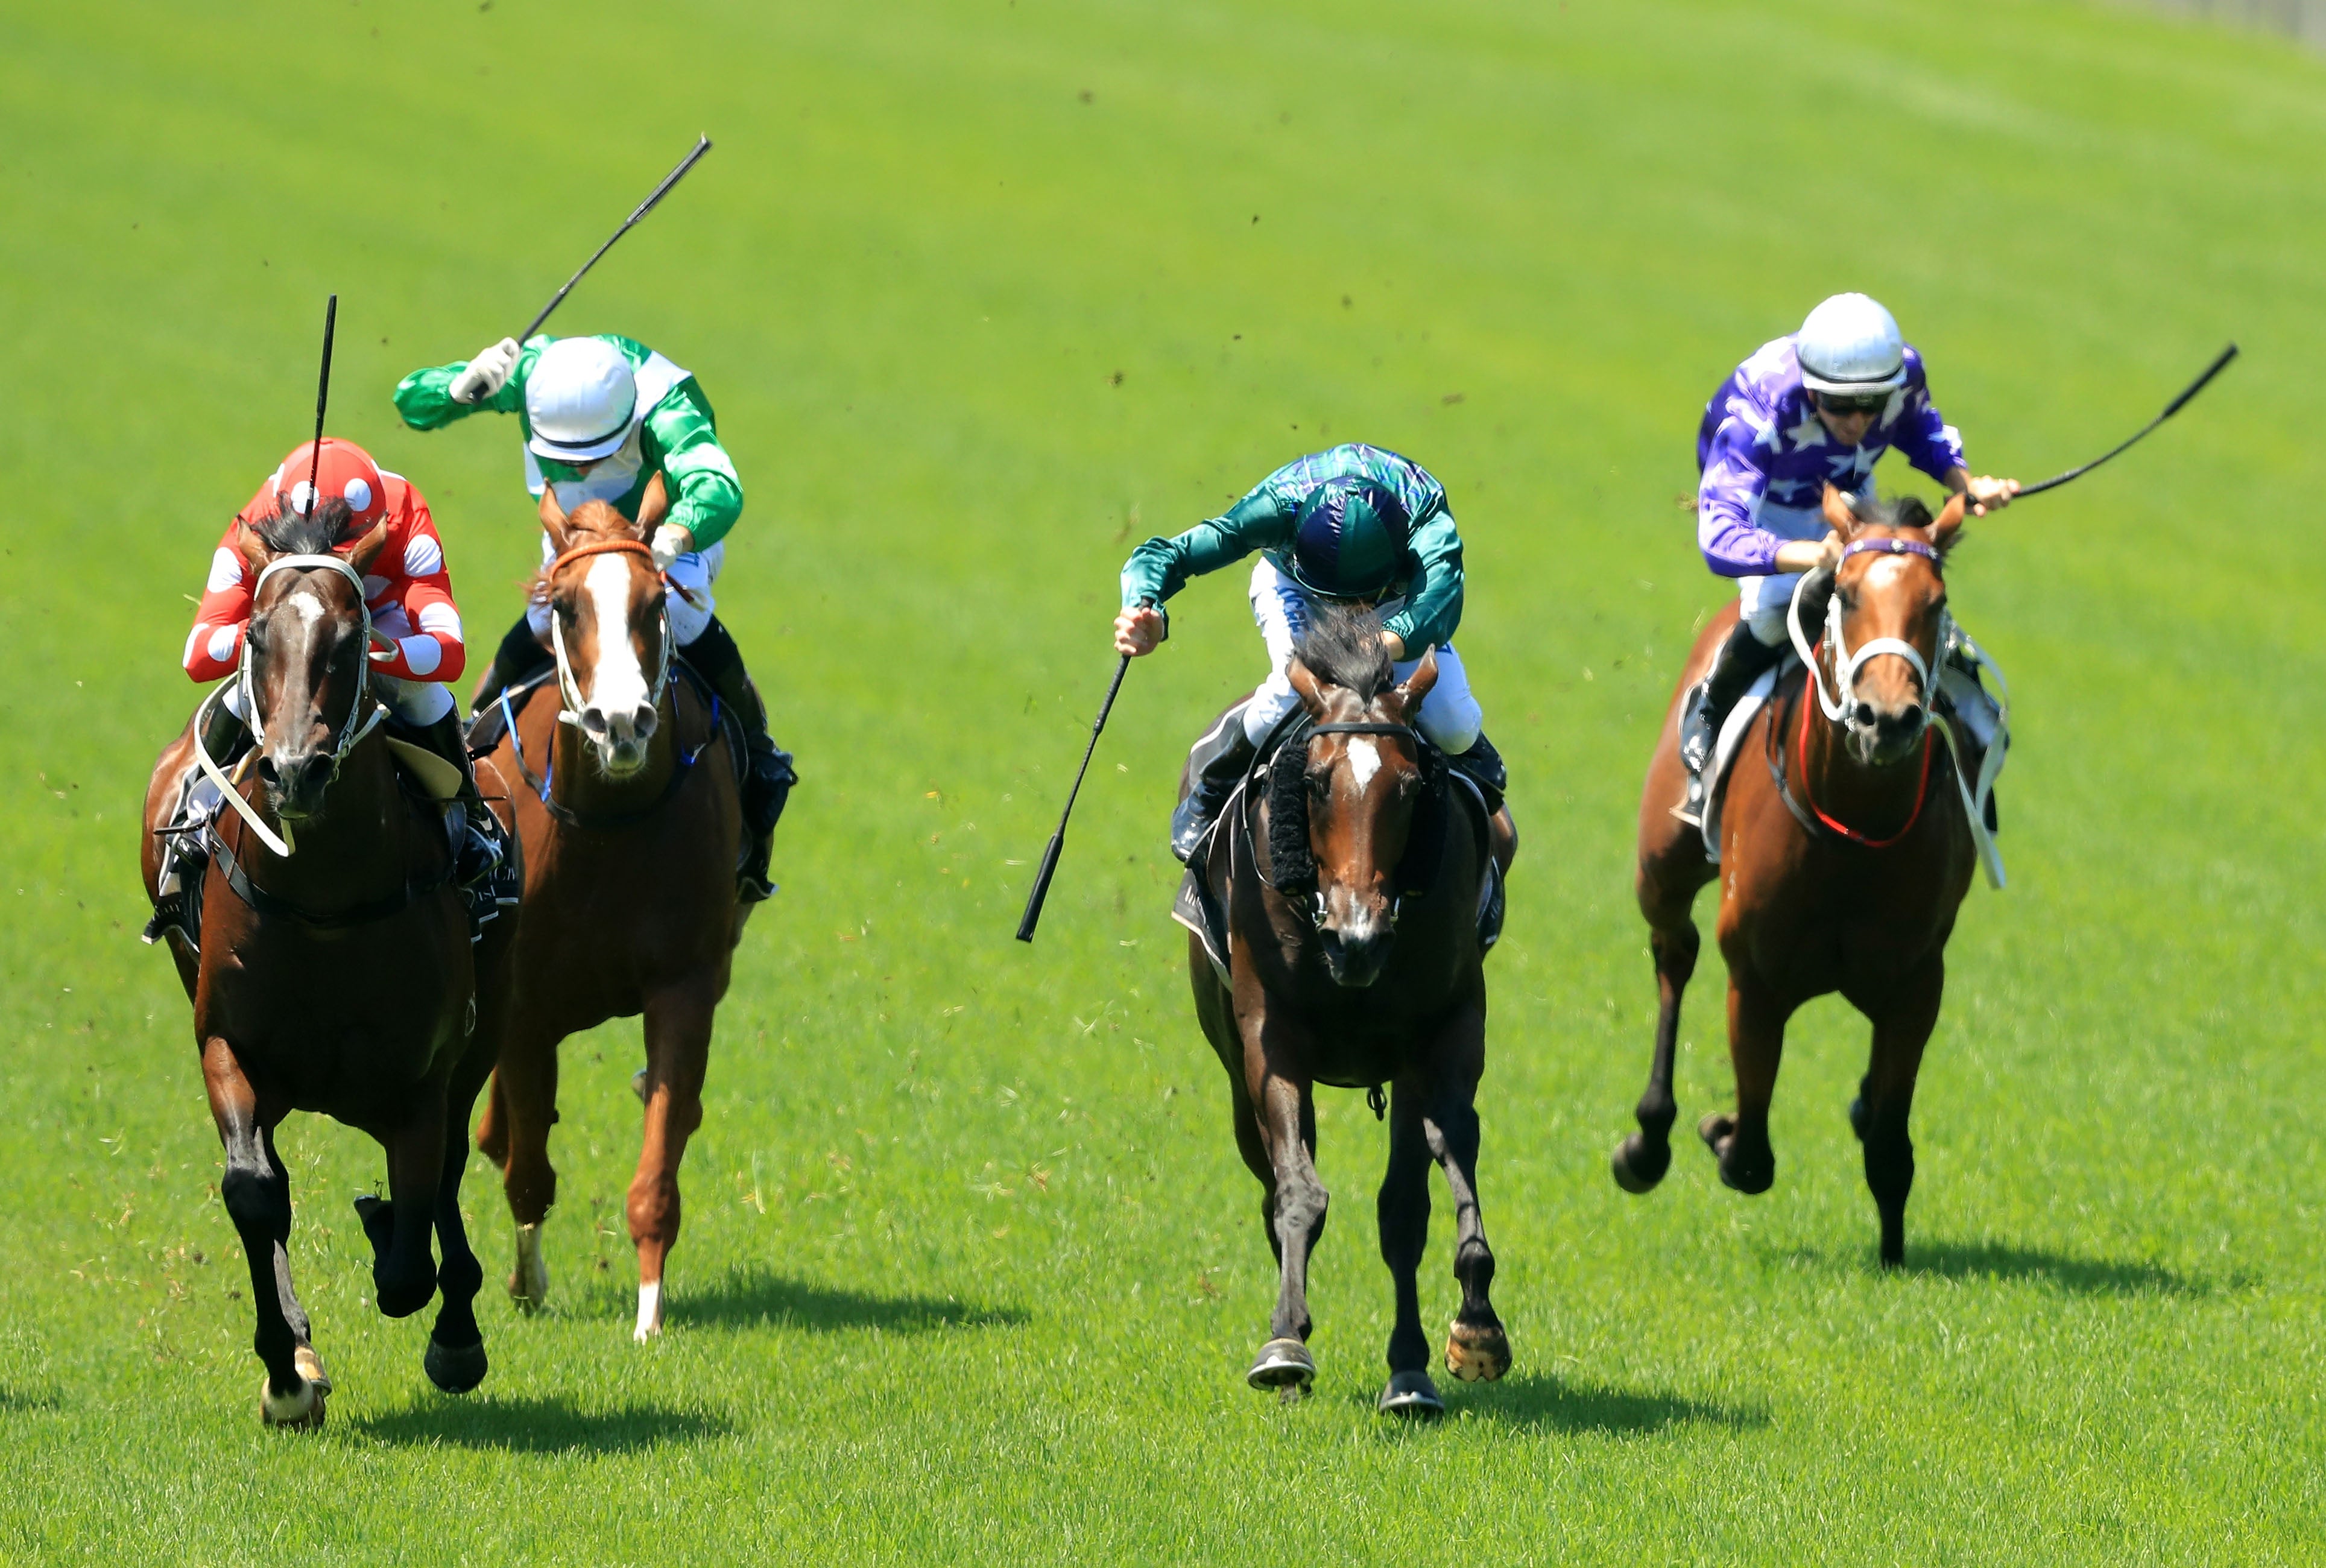 <p>Jockeys whip their horses during a race in Sydney, Australia</p>